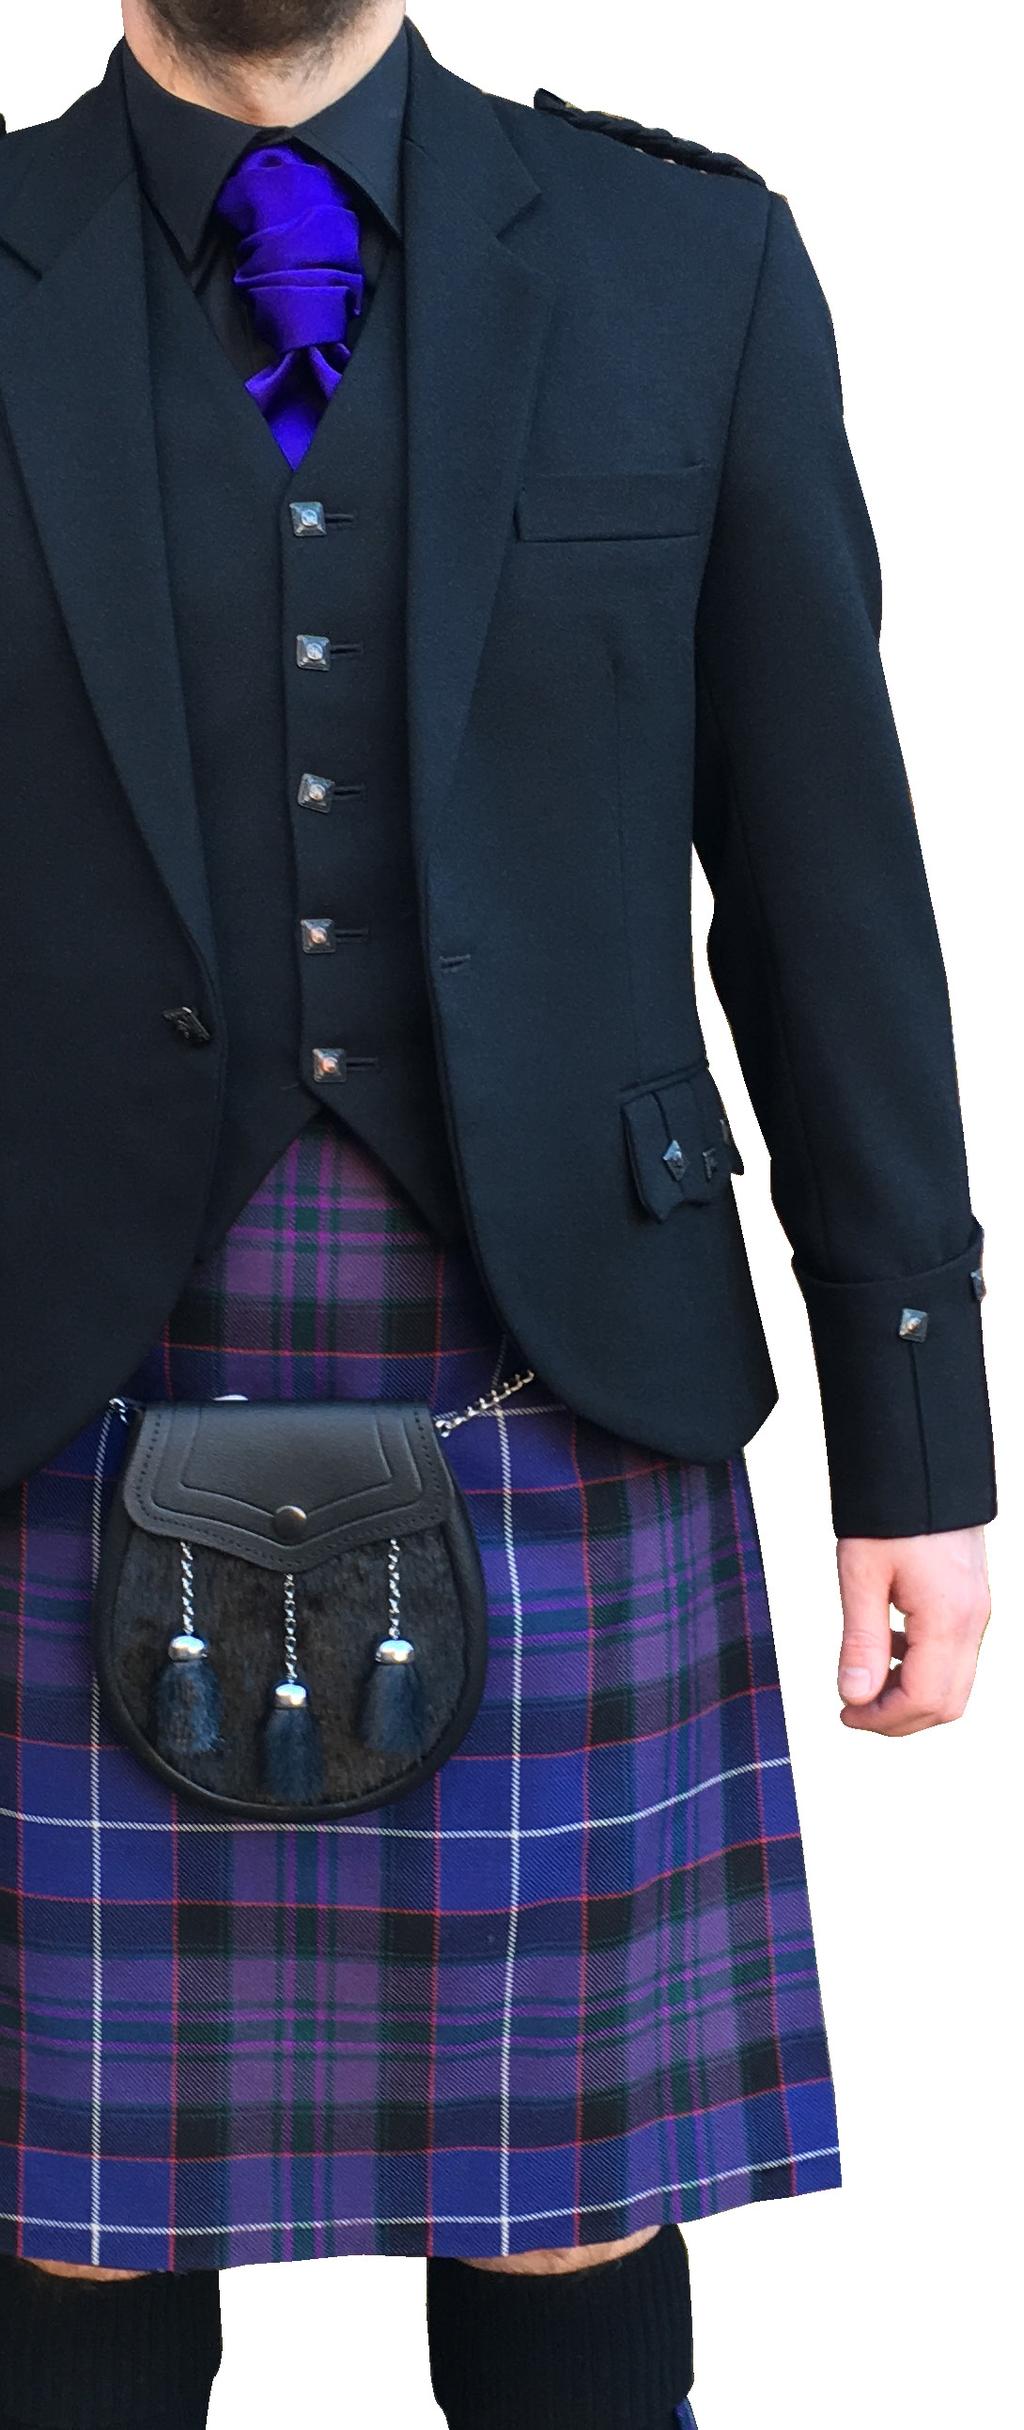 Black Button Argyll Outfit 75 Black Galloway Tartan Western Isles Tartan